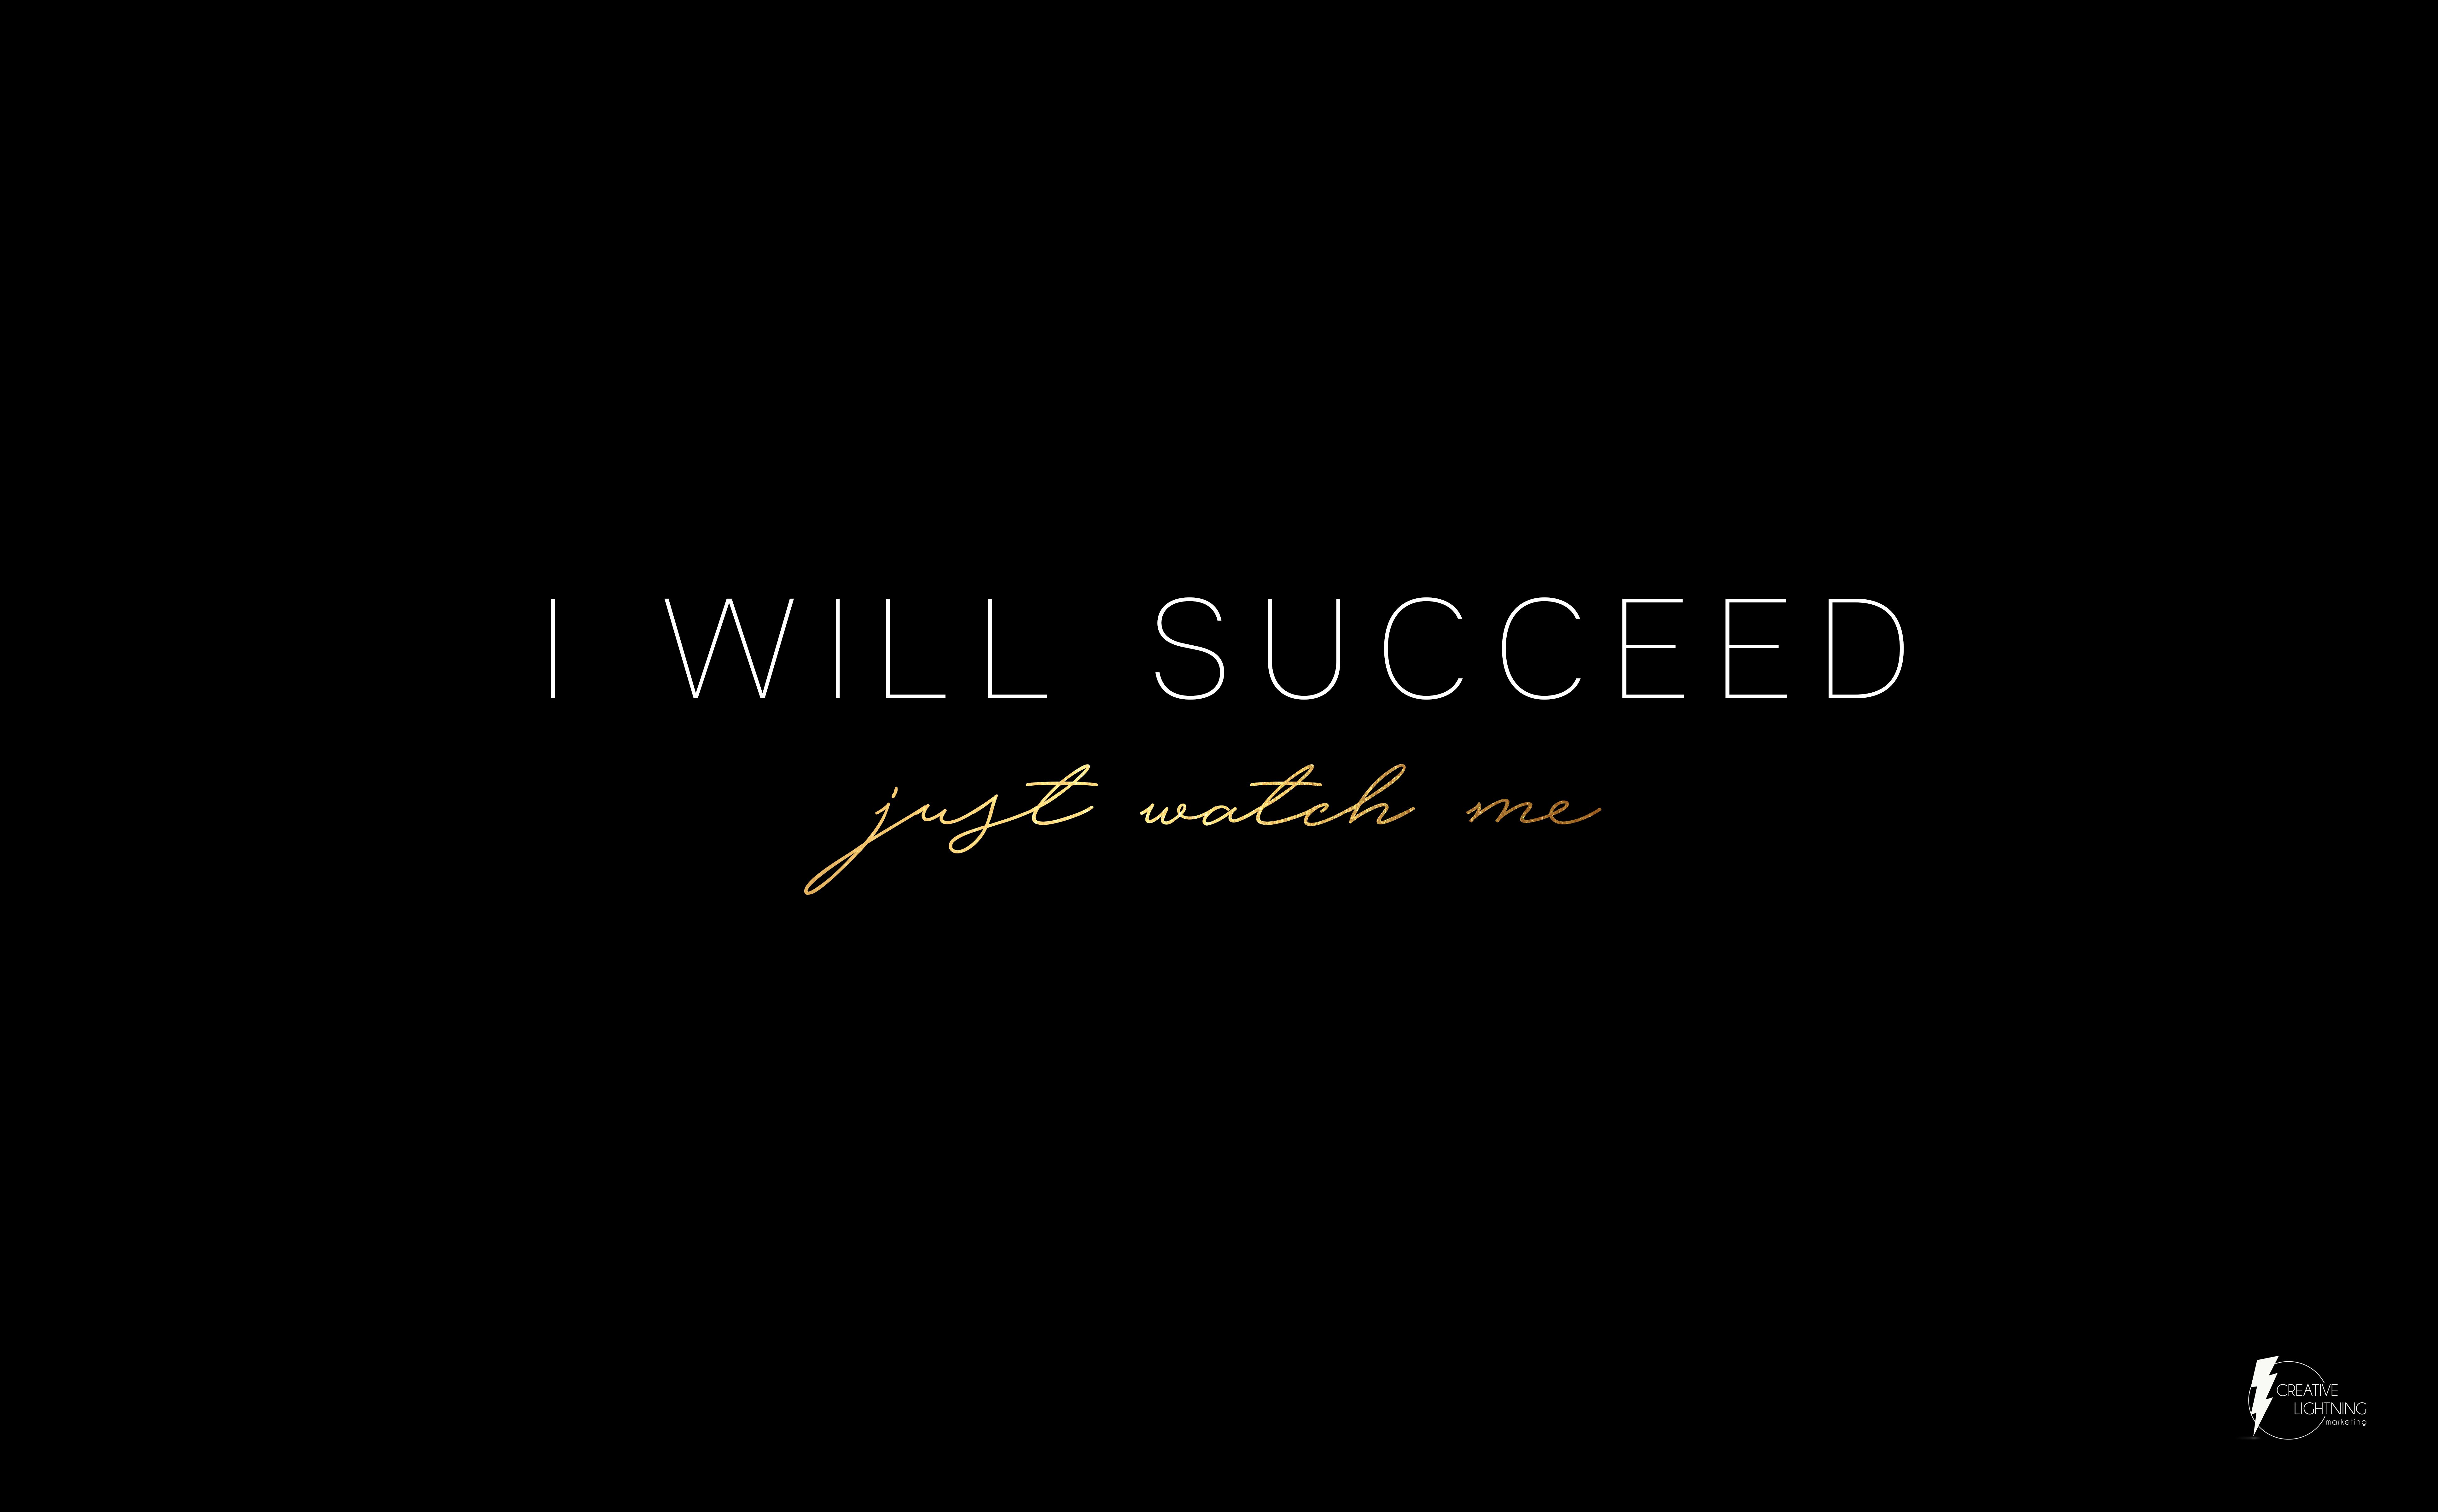 Motivational Wallpaper on Success: 7 Secrets of Success - Dont Give Up World-mncb.edu.vn